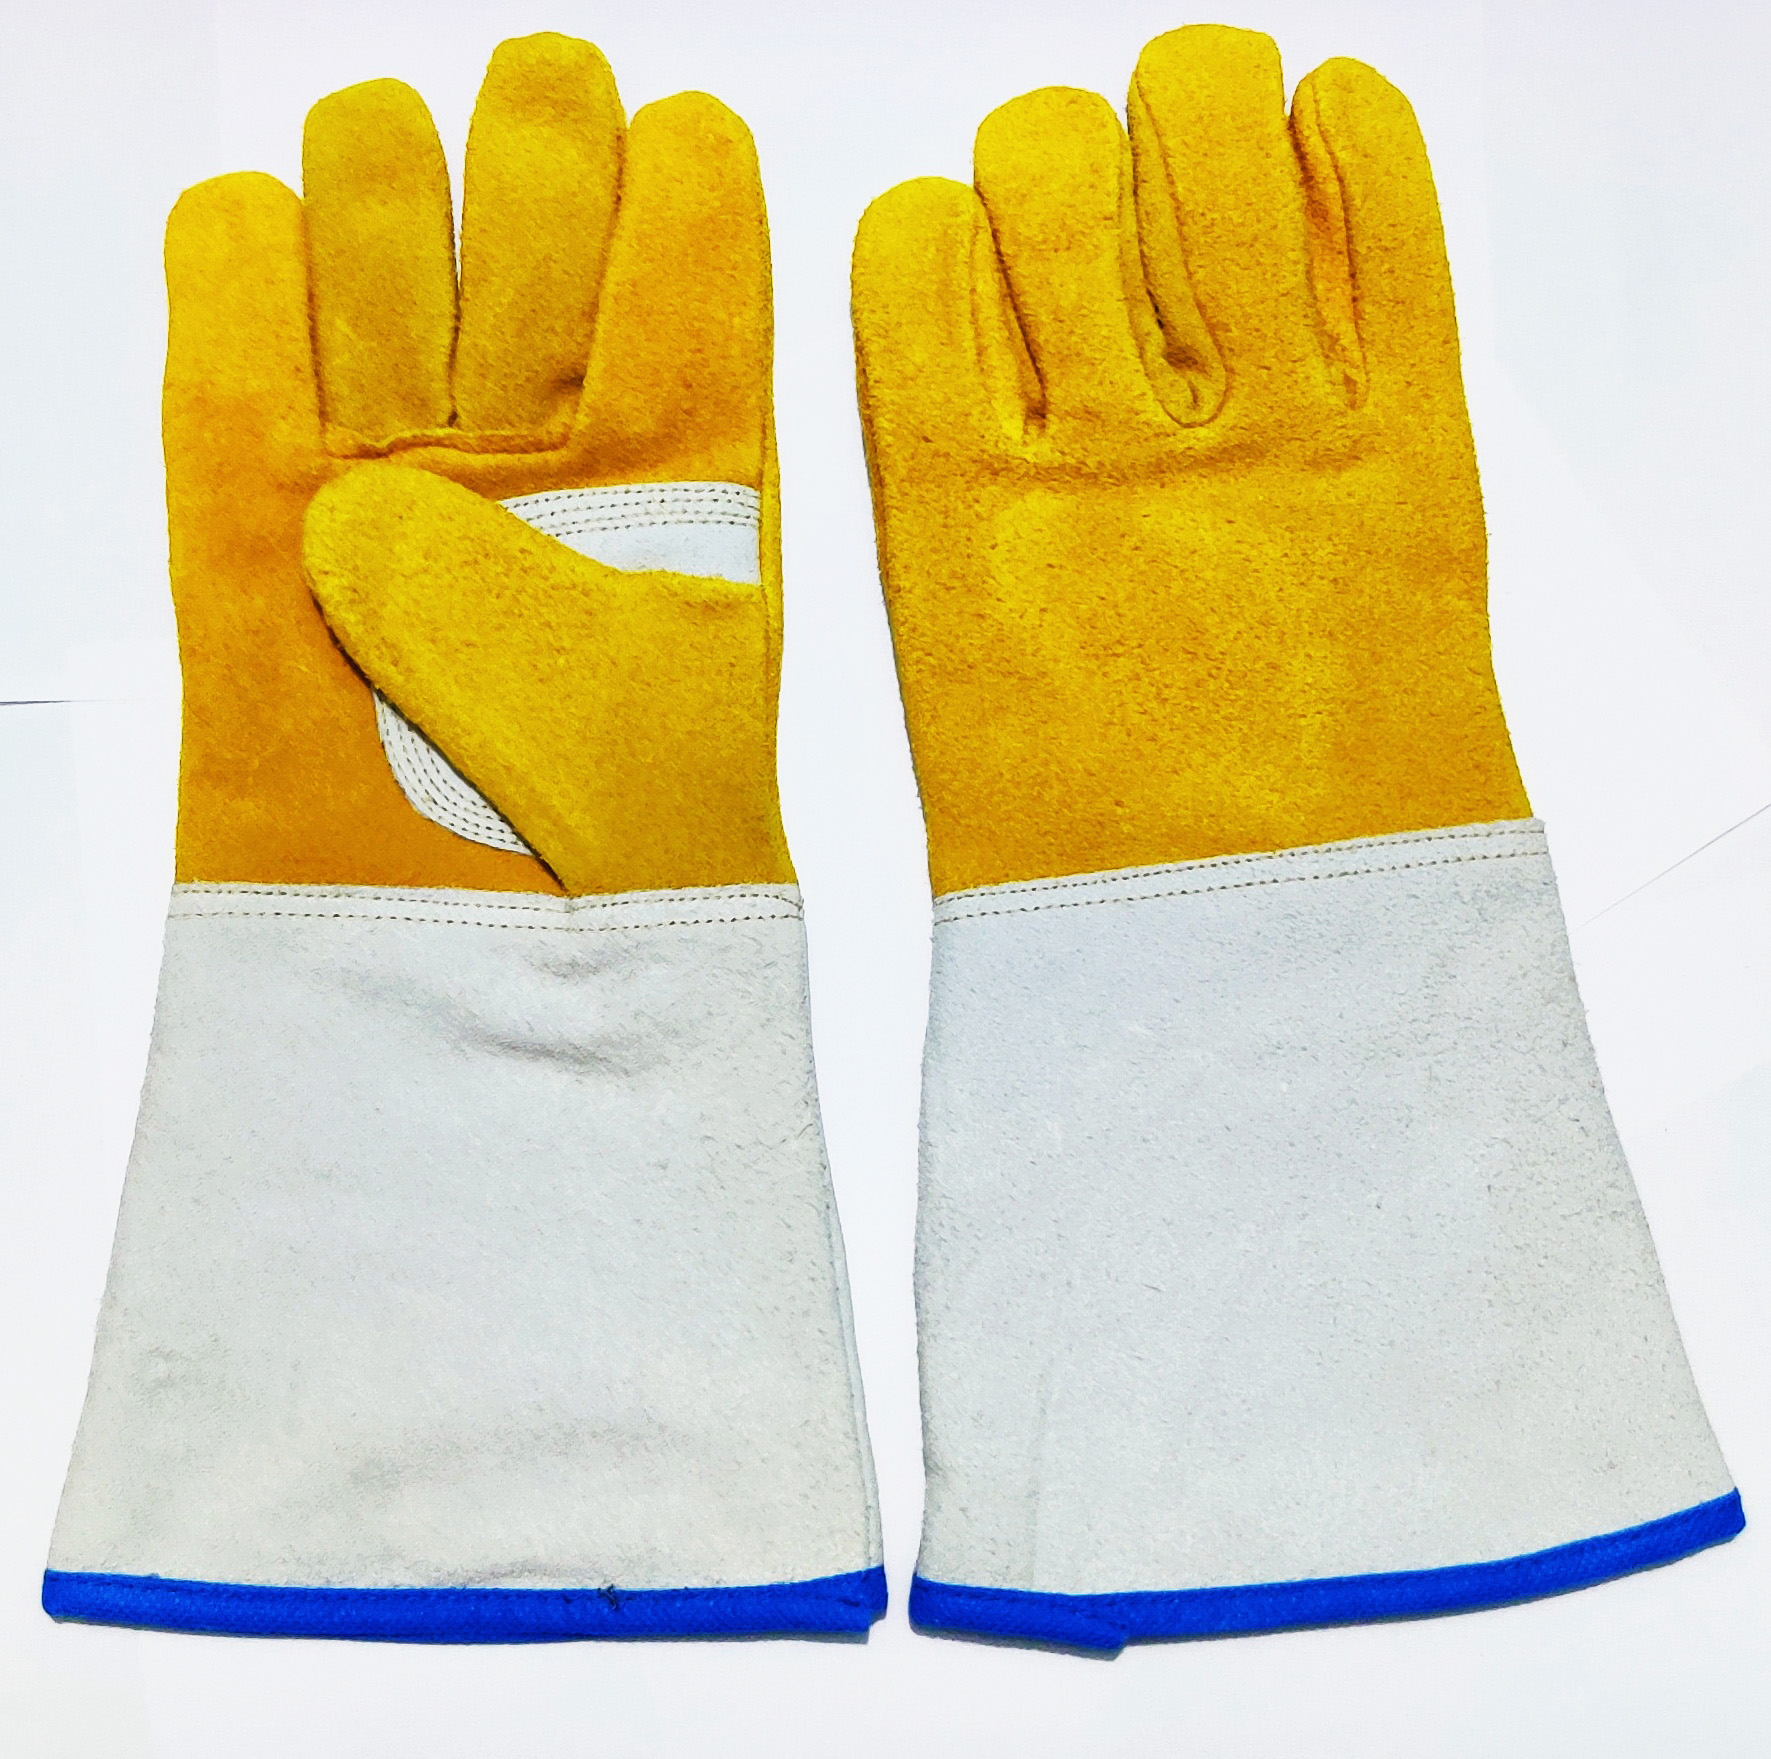 Leather hand gloves manufacturer in bangladesh